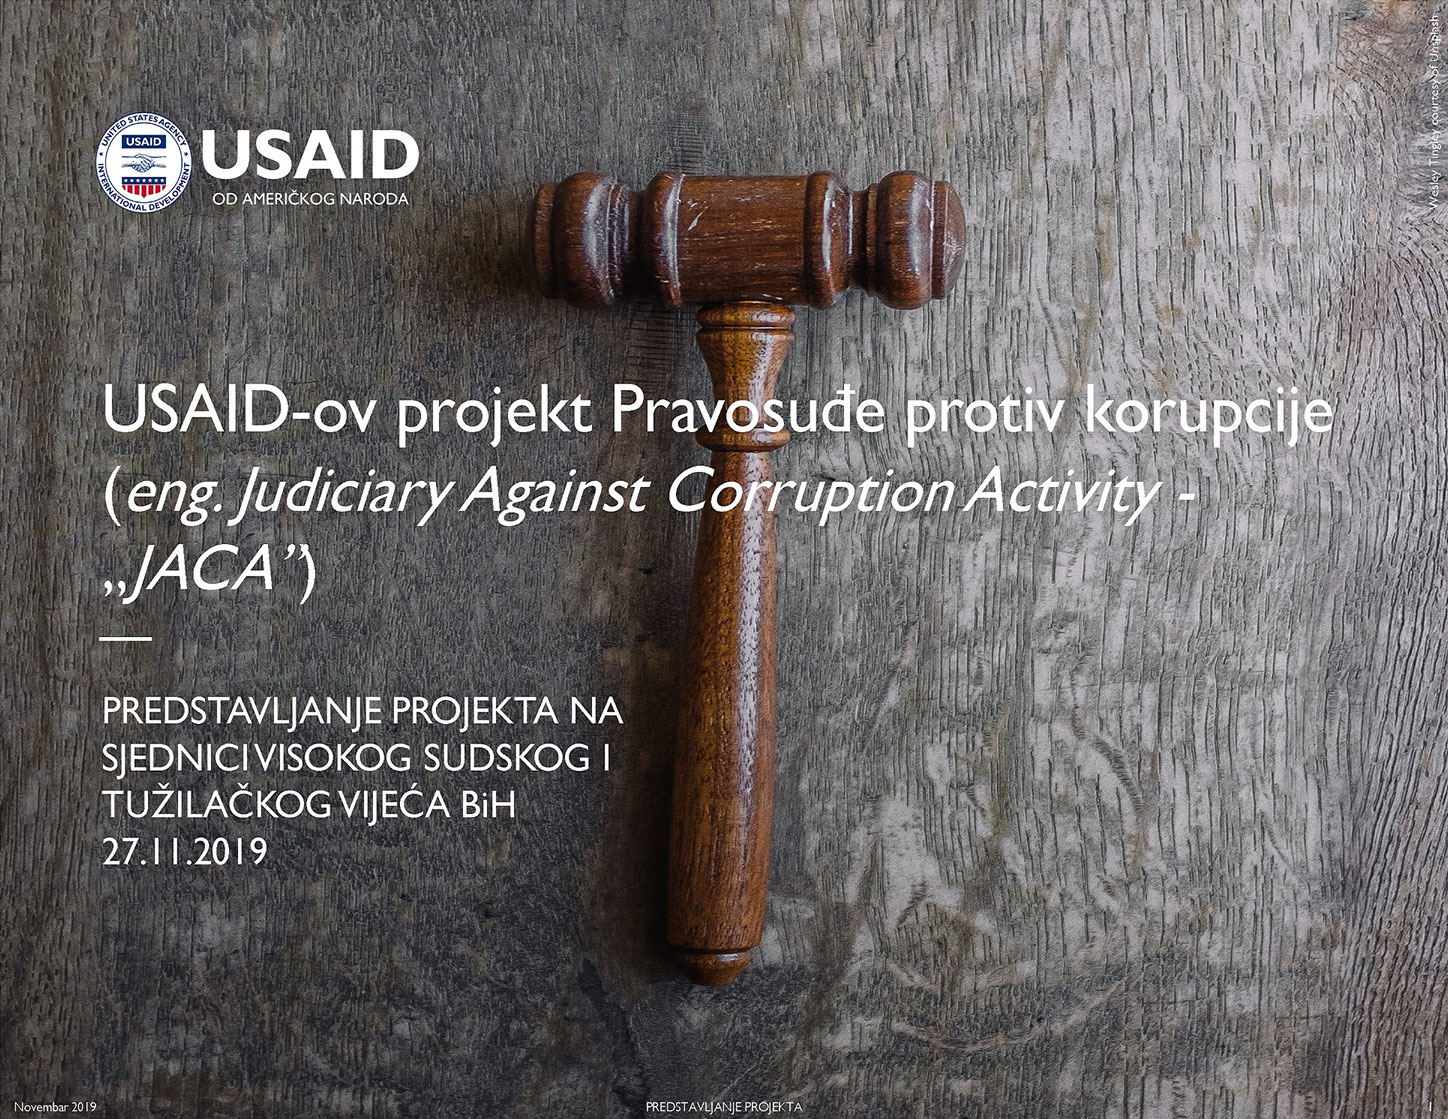 USAID’s Judiciary Against Corruption Activity, Bosnia and Herzegovina